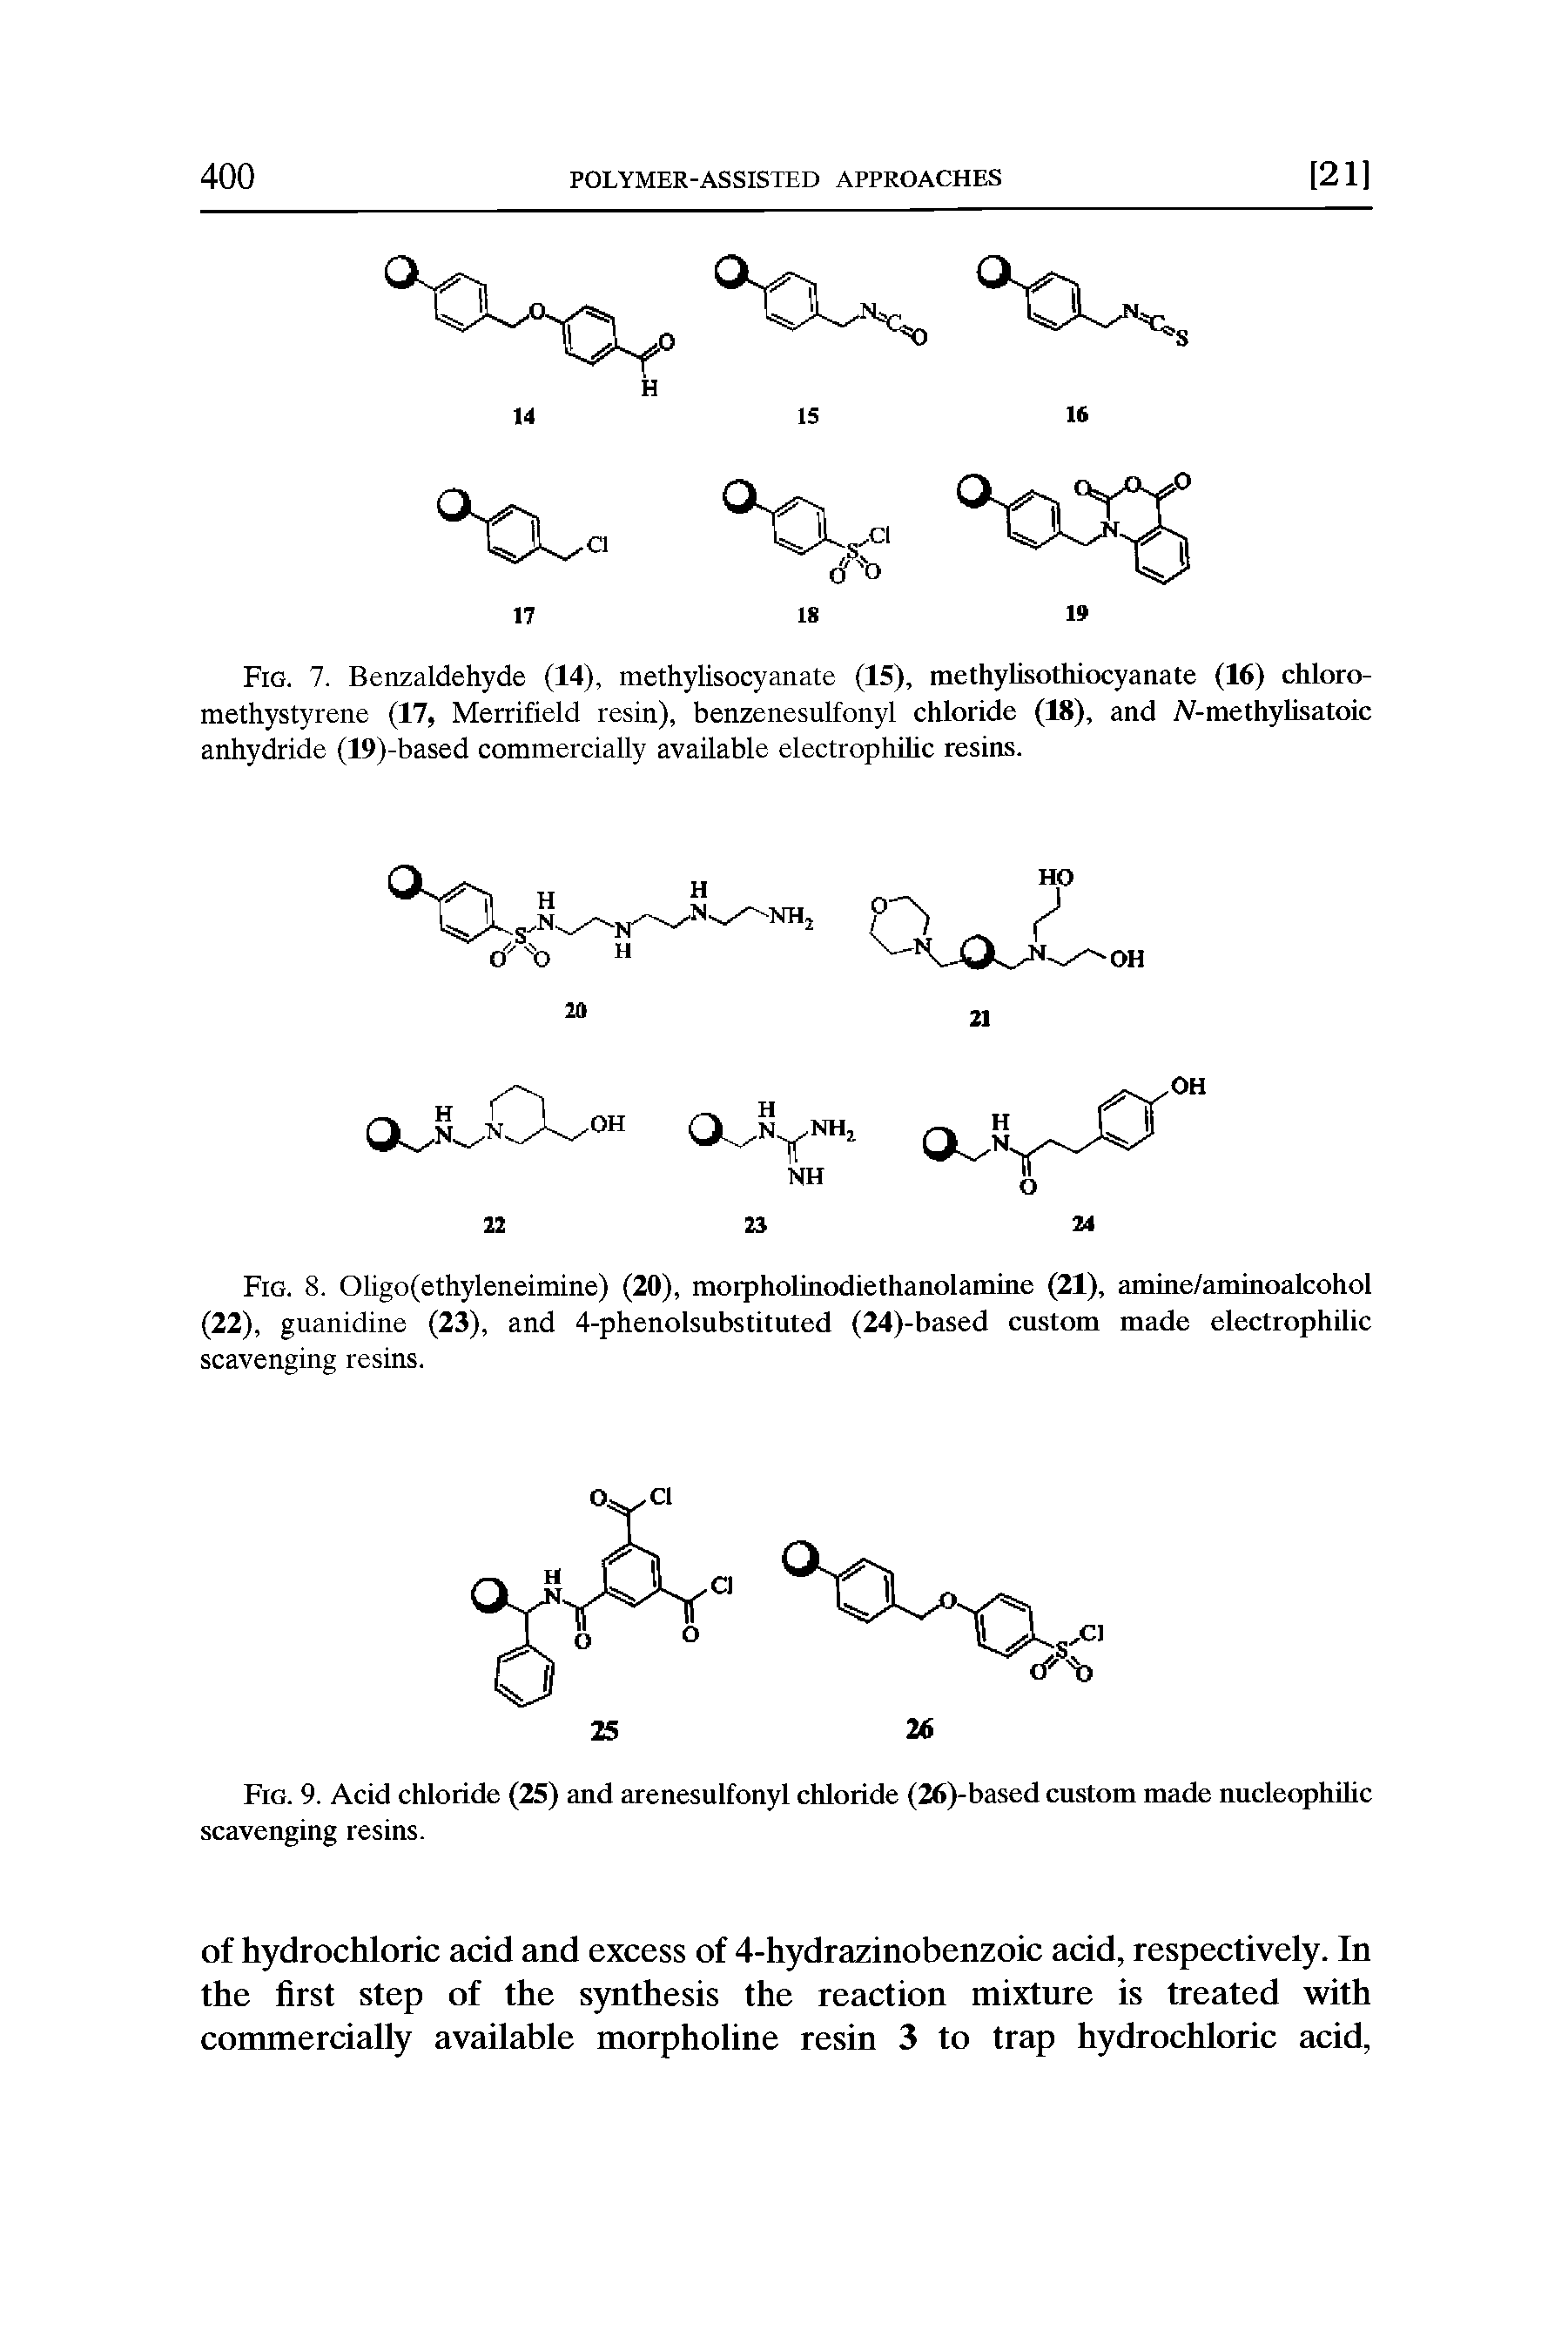 Fig. 9. Acid chloride (25) and arenesulfonyl chloride (26)-based custom made nucleophilic scavenging resins.